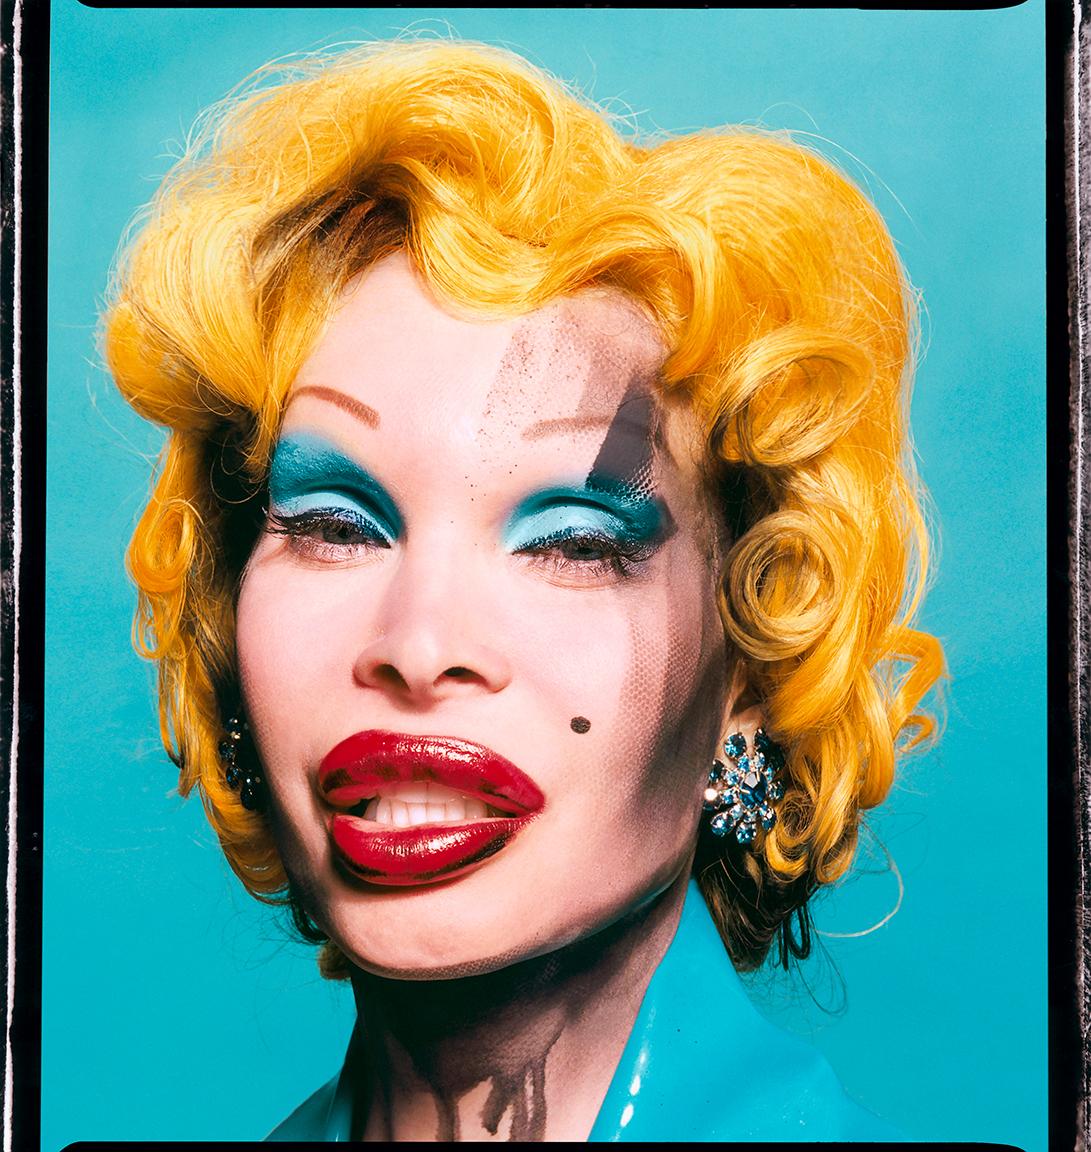 Color Photograph David LaChapelle - Amanda : My Own Marilyn (Ma propre Marilyn), 2007